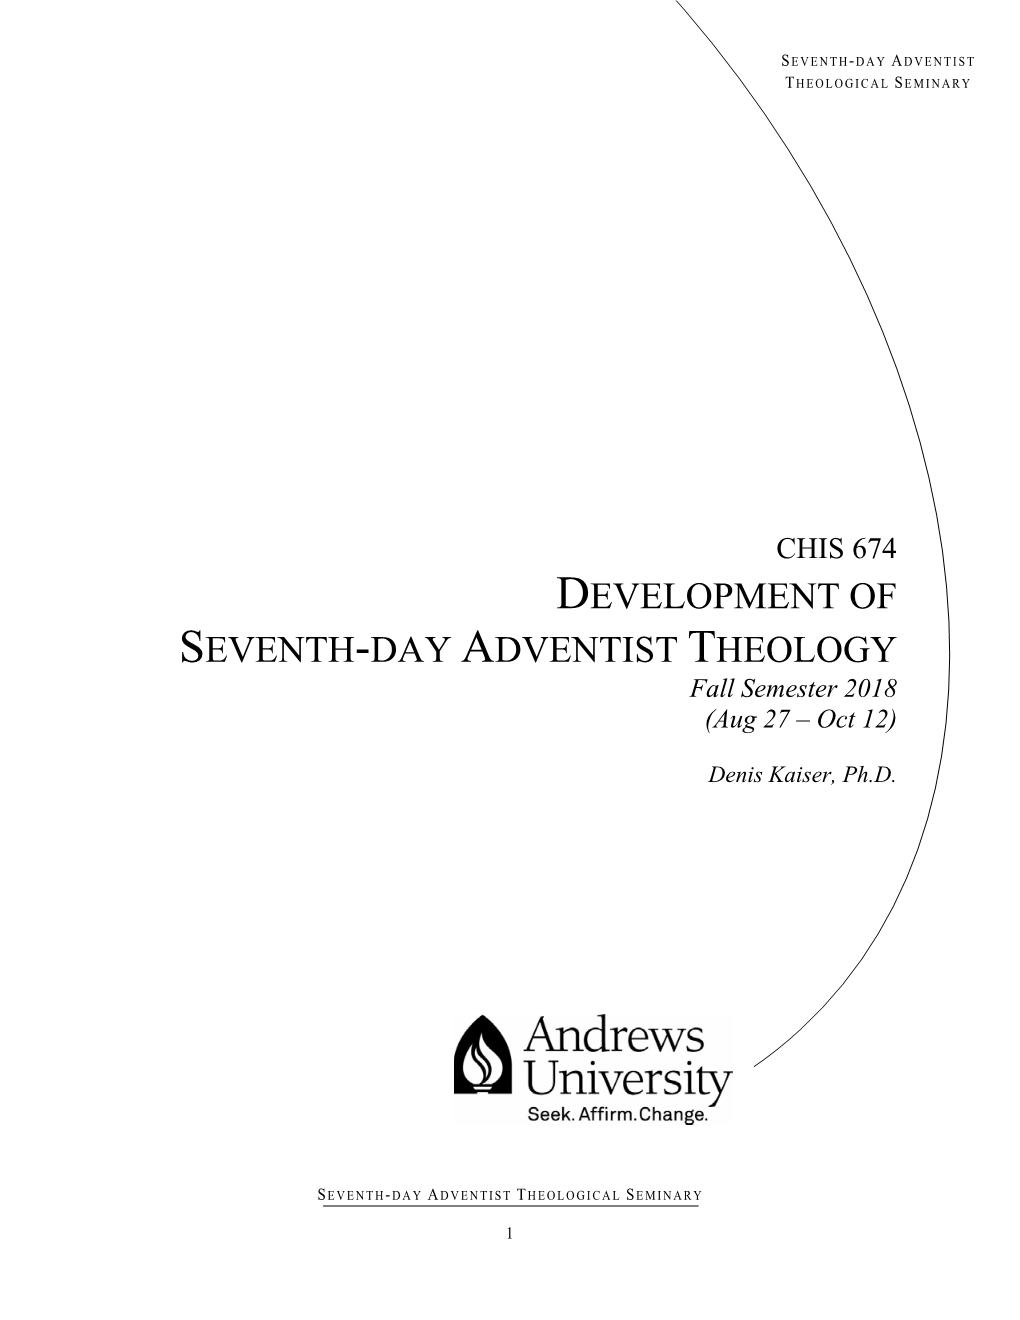 Development of Seventh-Day Adventist Theology Syllabus